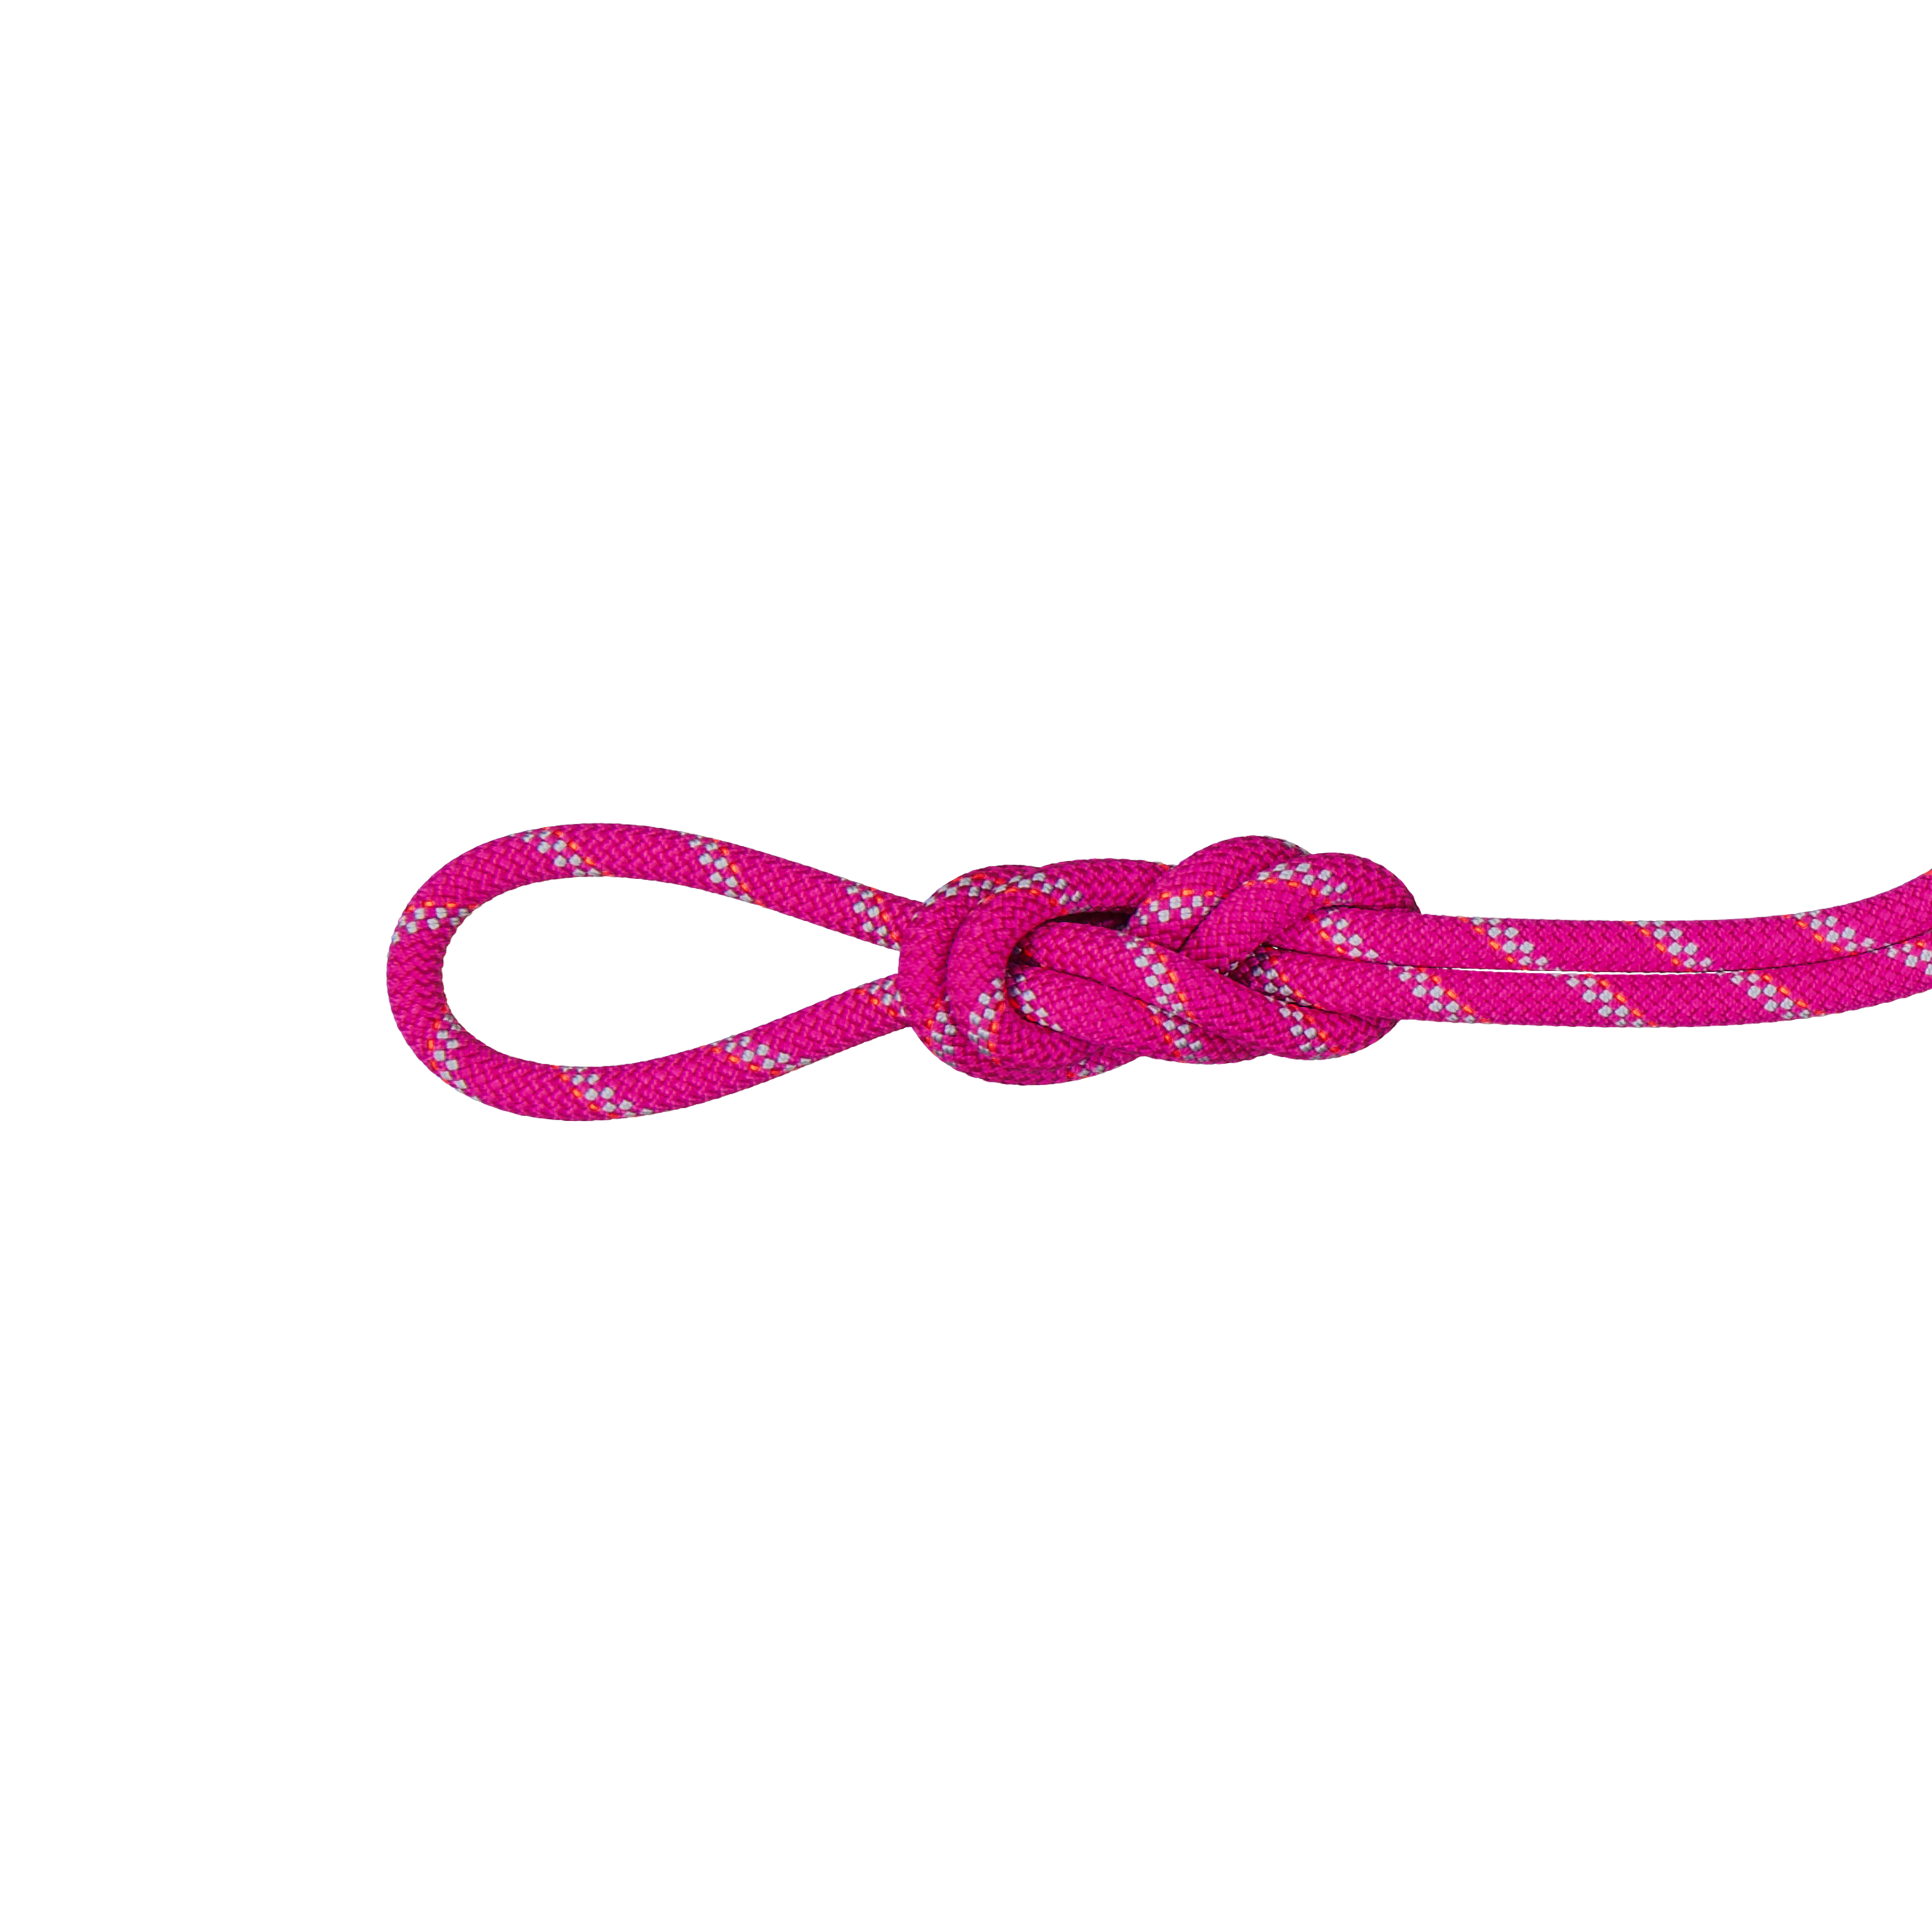 8.0 Alpine Dry Rope - Dry Standard, pink-zen, 70 m thumbnail